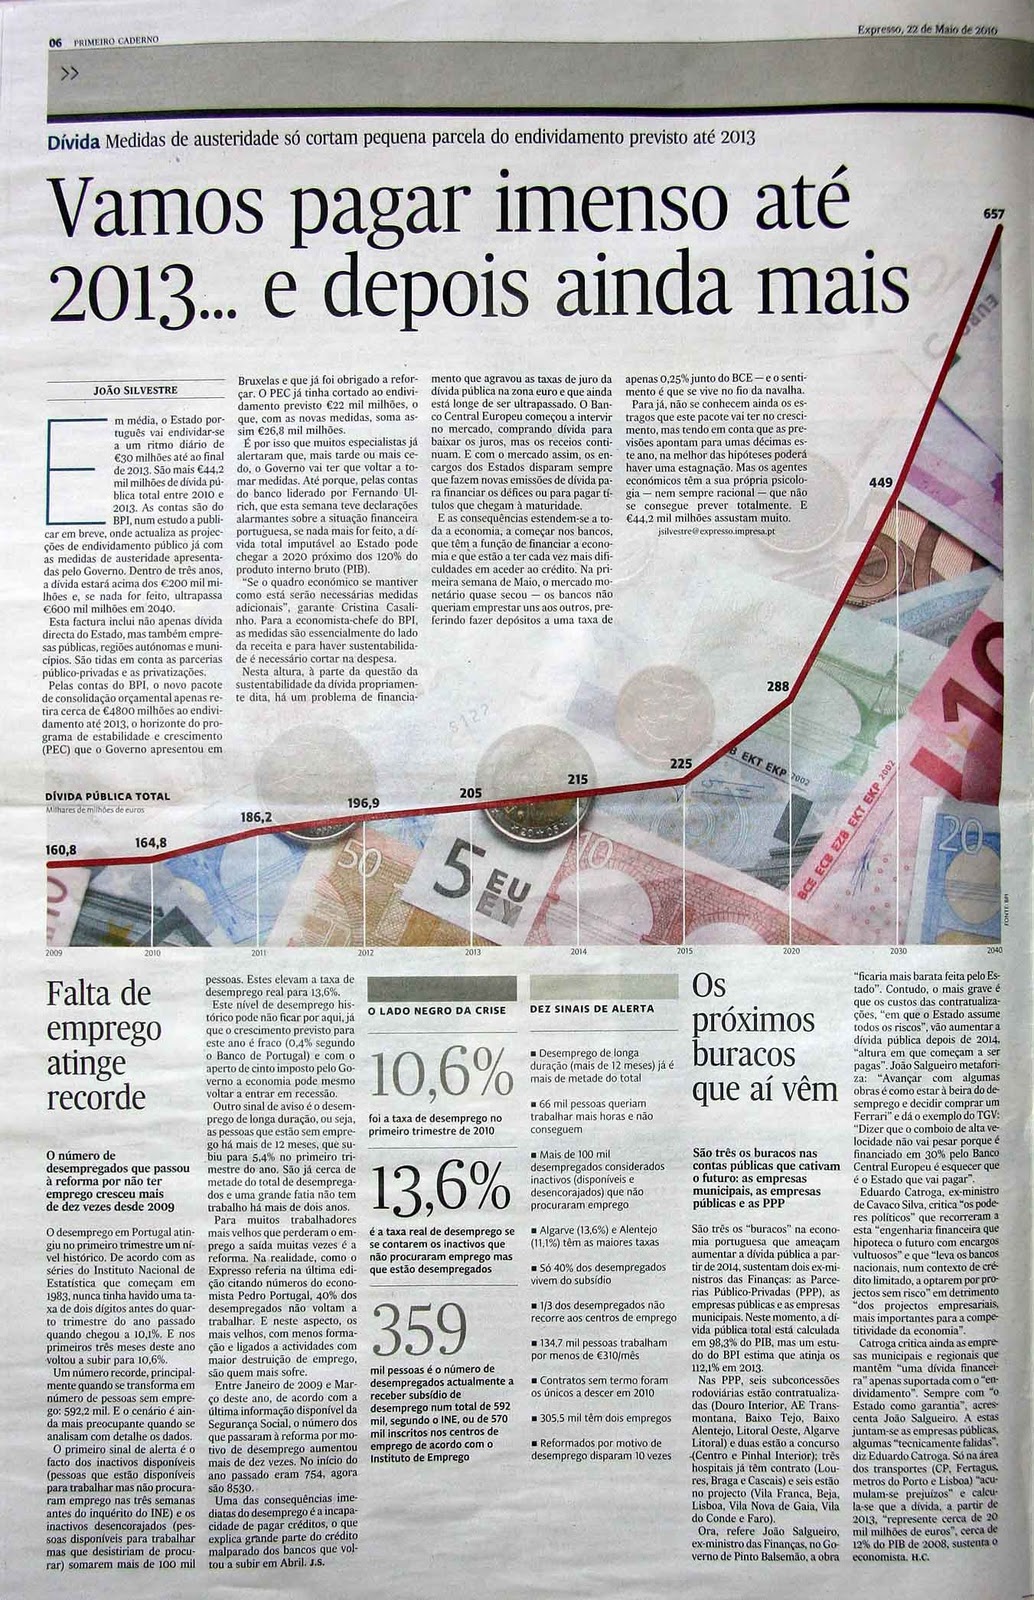 [2010-05-22 Expresso - Dívida Pública Total - origianal (low res)[7].jpg]